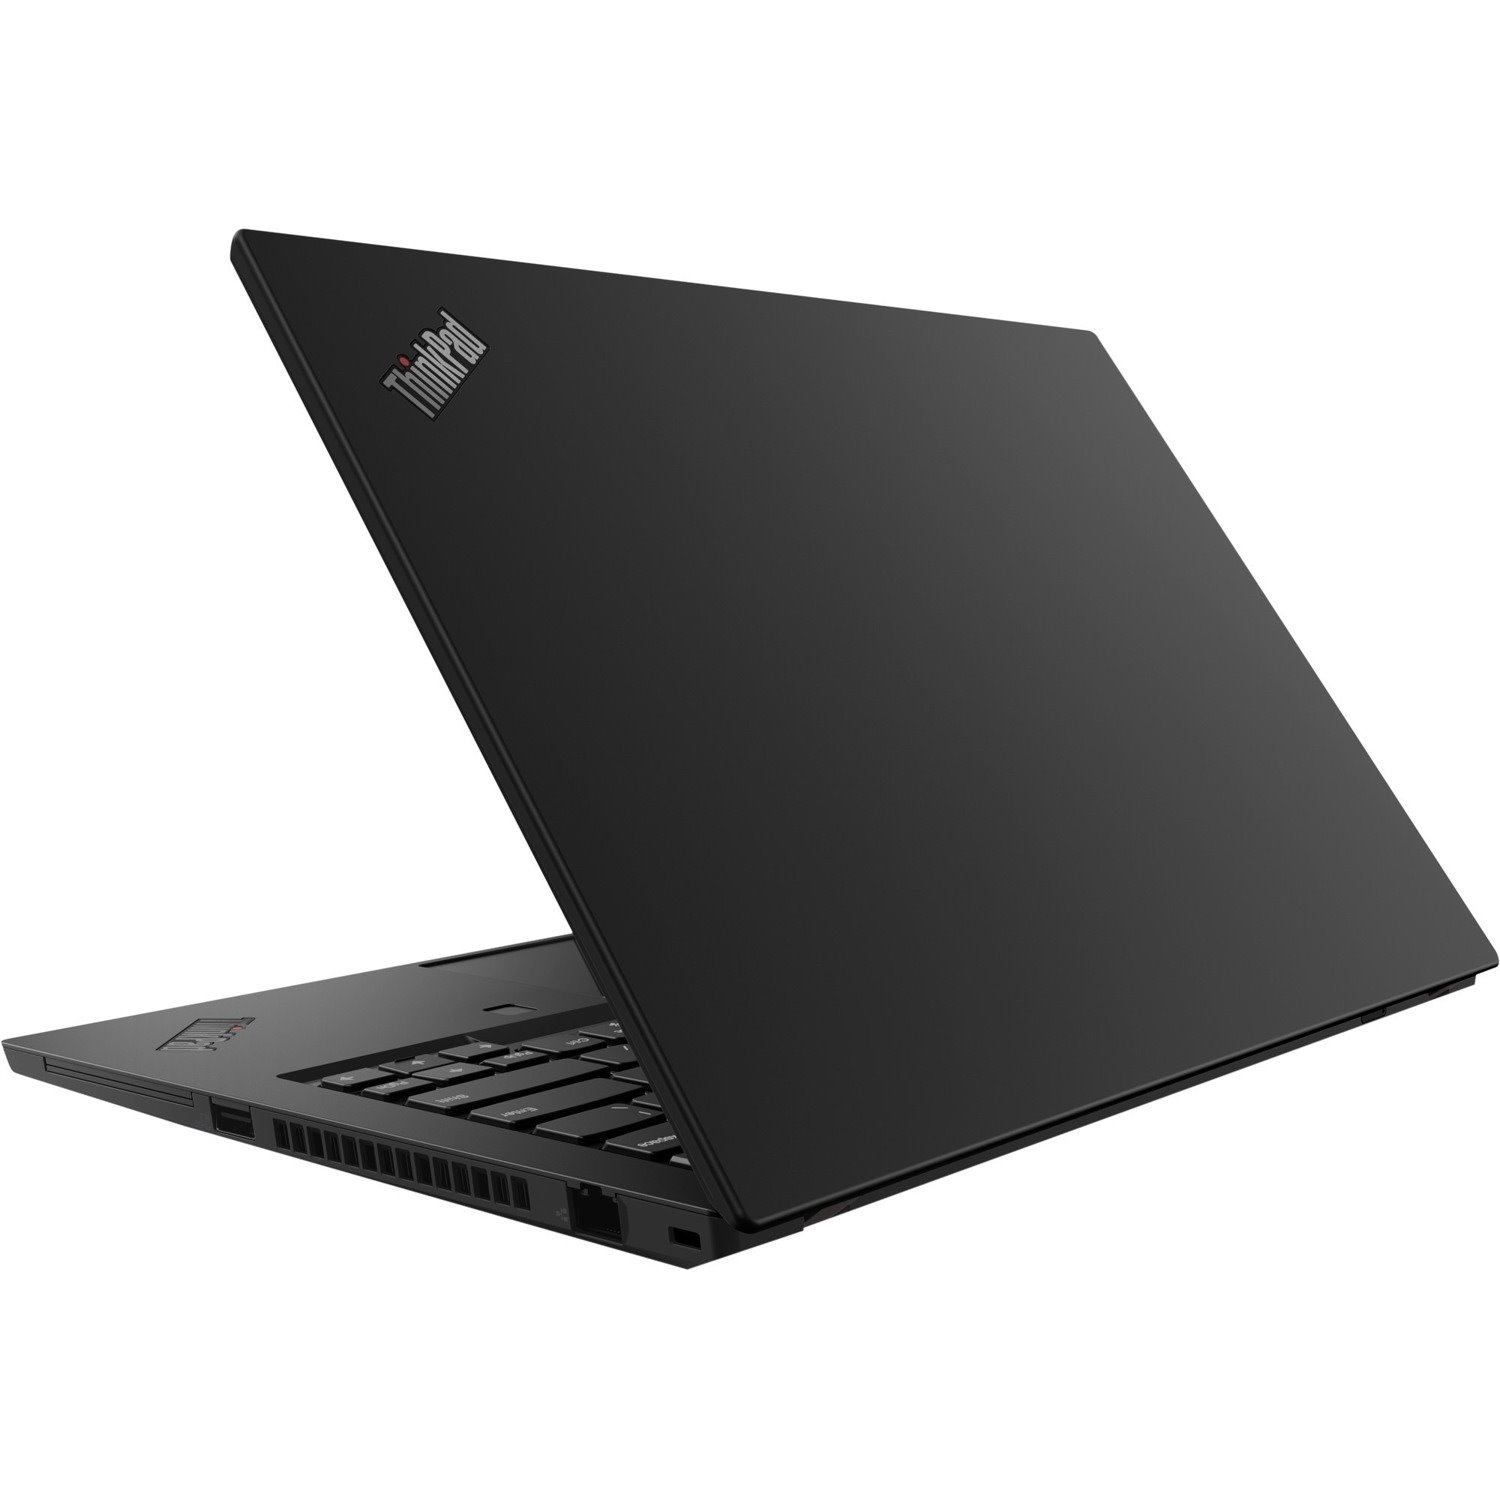 Lenovo ThinkPad T495 20NJS02C00 35.6 cm (14") Notebook - Full HD - 1920 x 1080 - AMD Ryzen 5 3500U Quad-core (4 Core) 2.10 GHz - 16 GB RAM - 256 GB SSD - Glossy Black